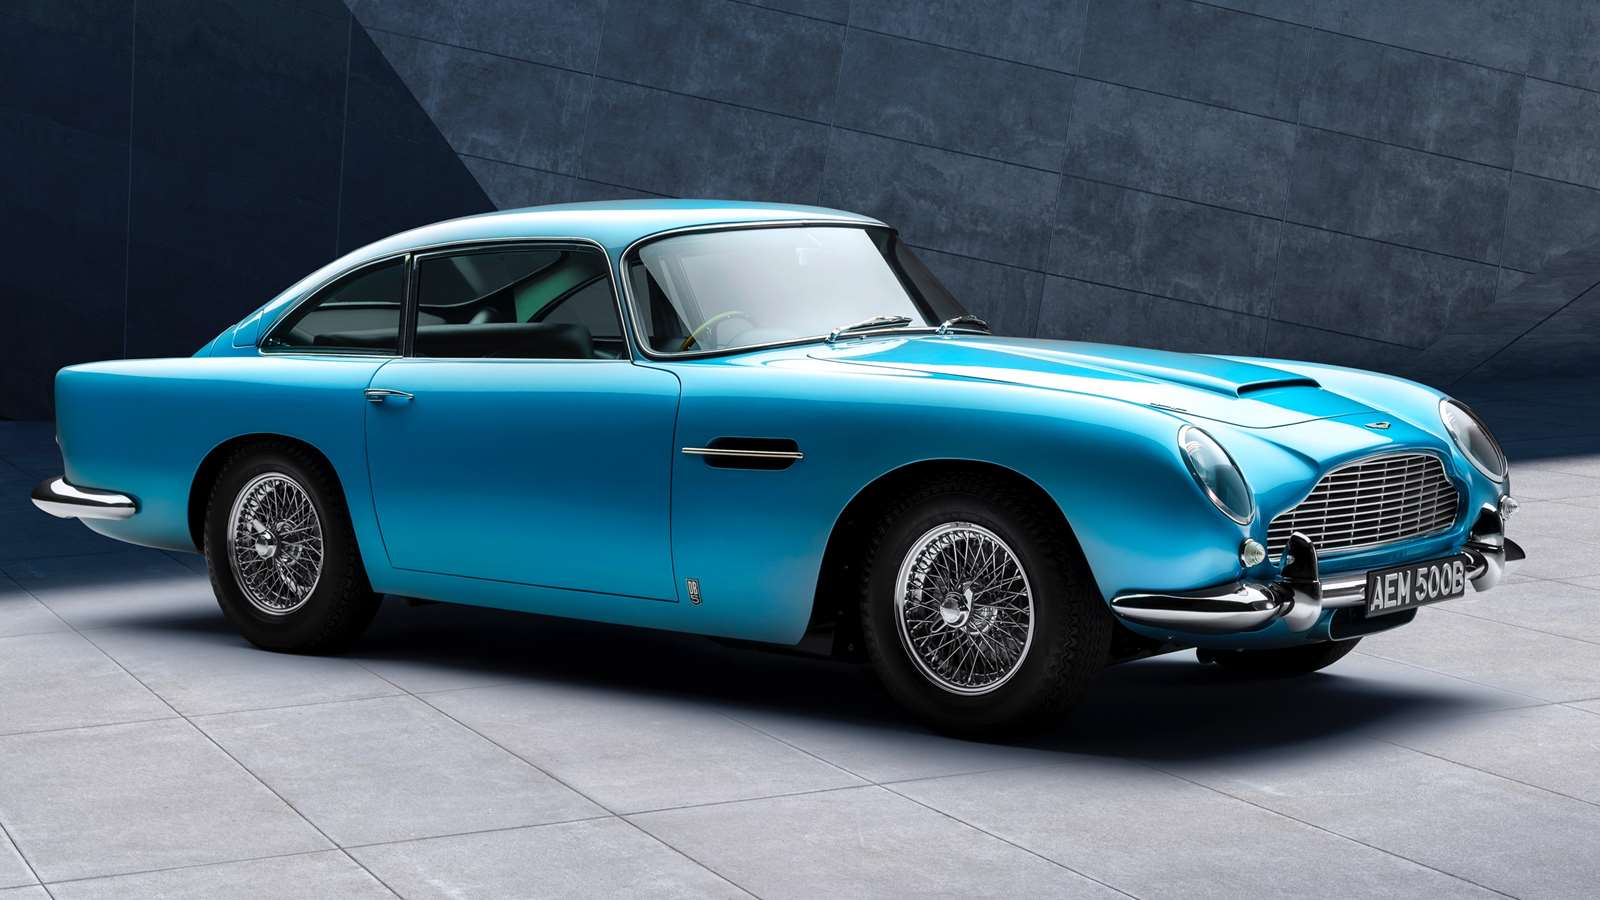 Aston Martin DB5 celebrates 60th anniversary